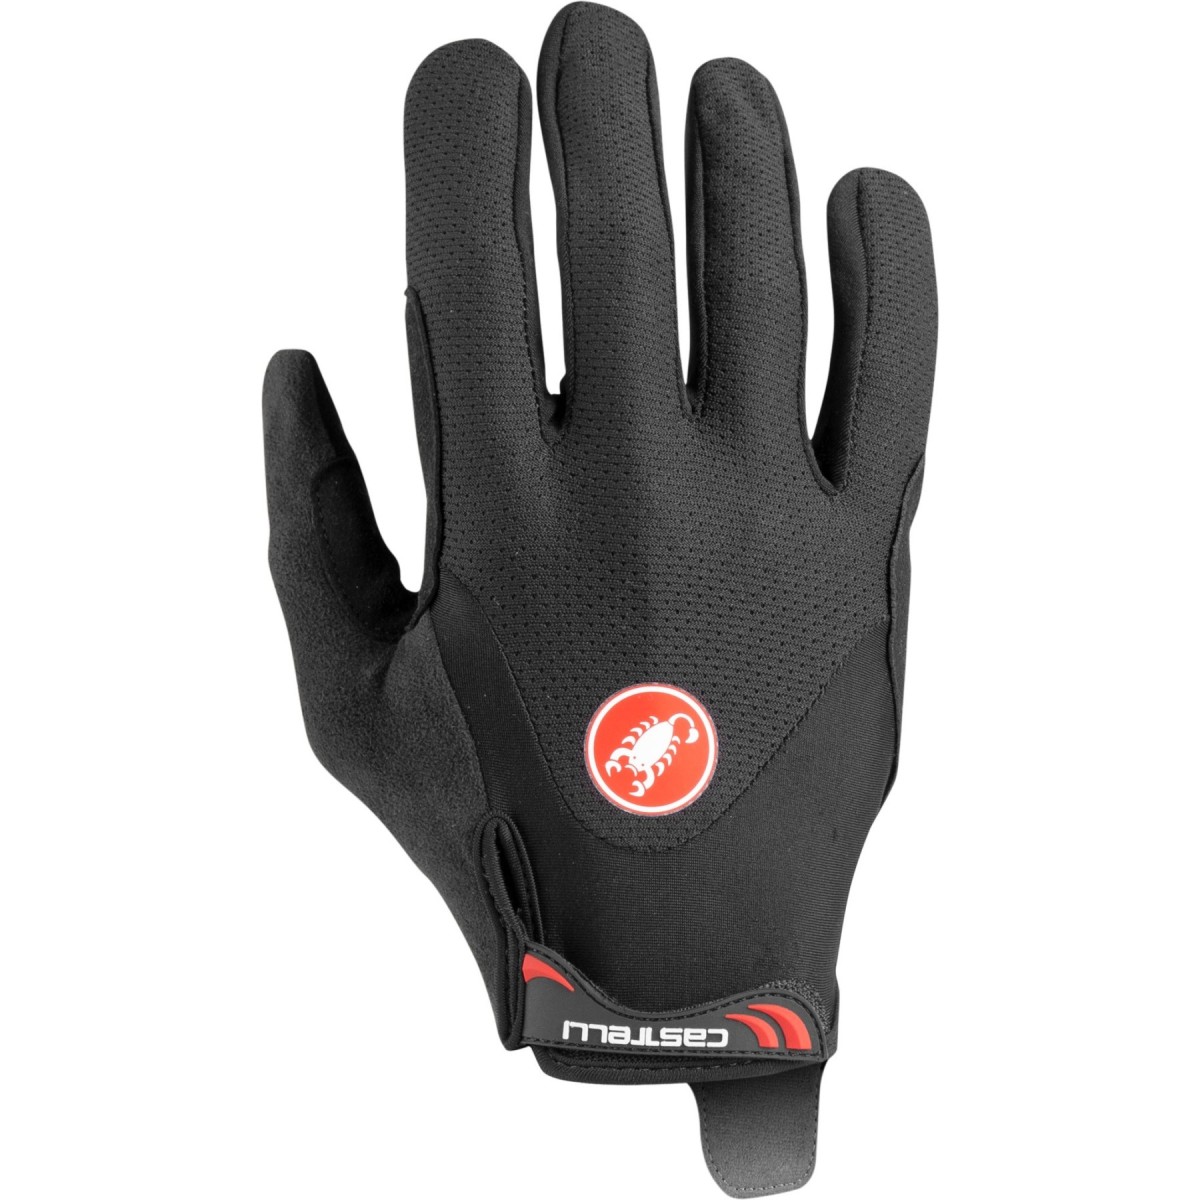 CASTELLI ARENBERG GEL LF long gloves - black